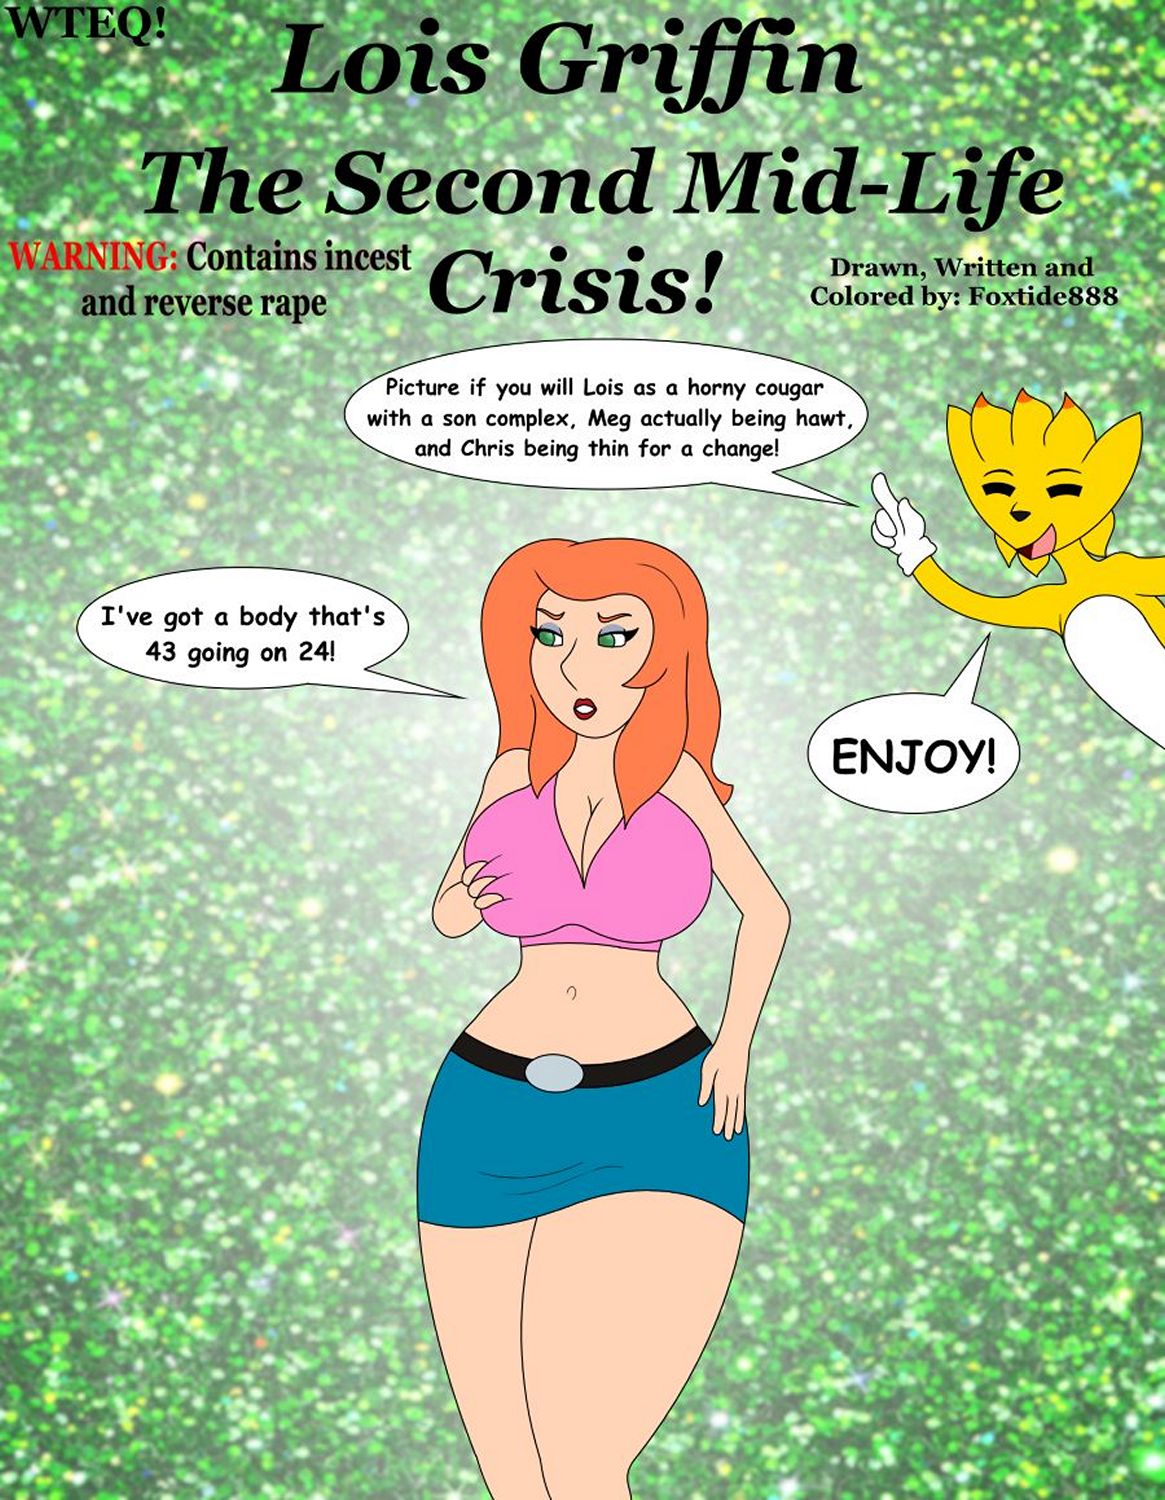 The second mid life crisis foxtide888 porn comic